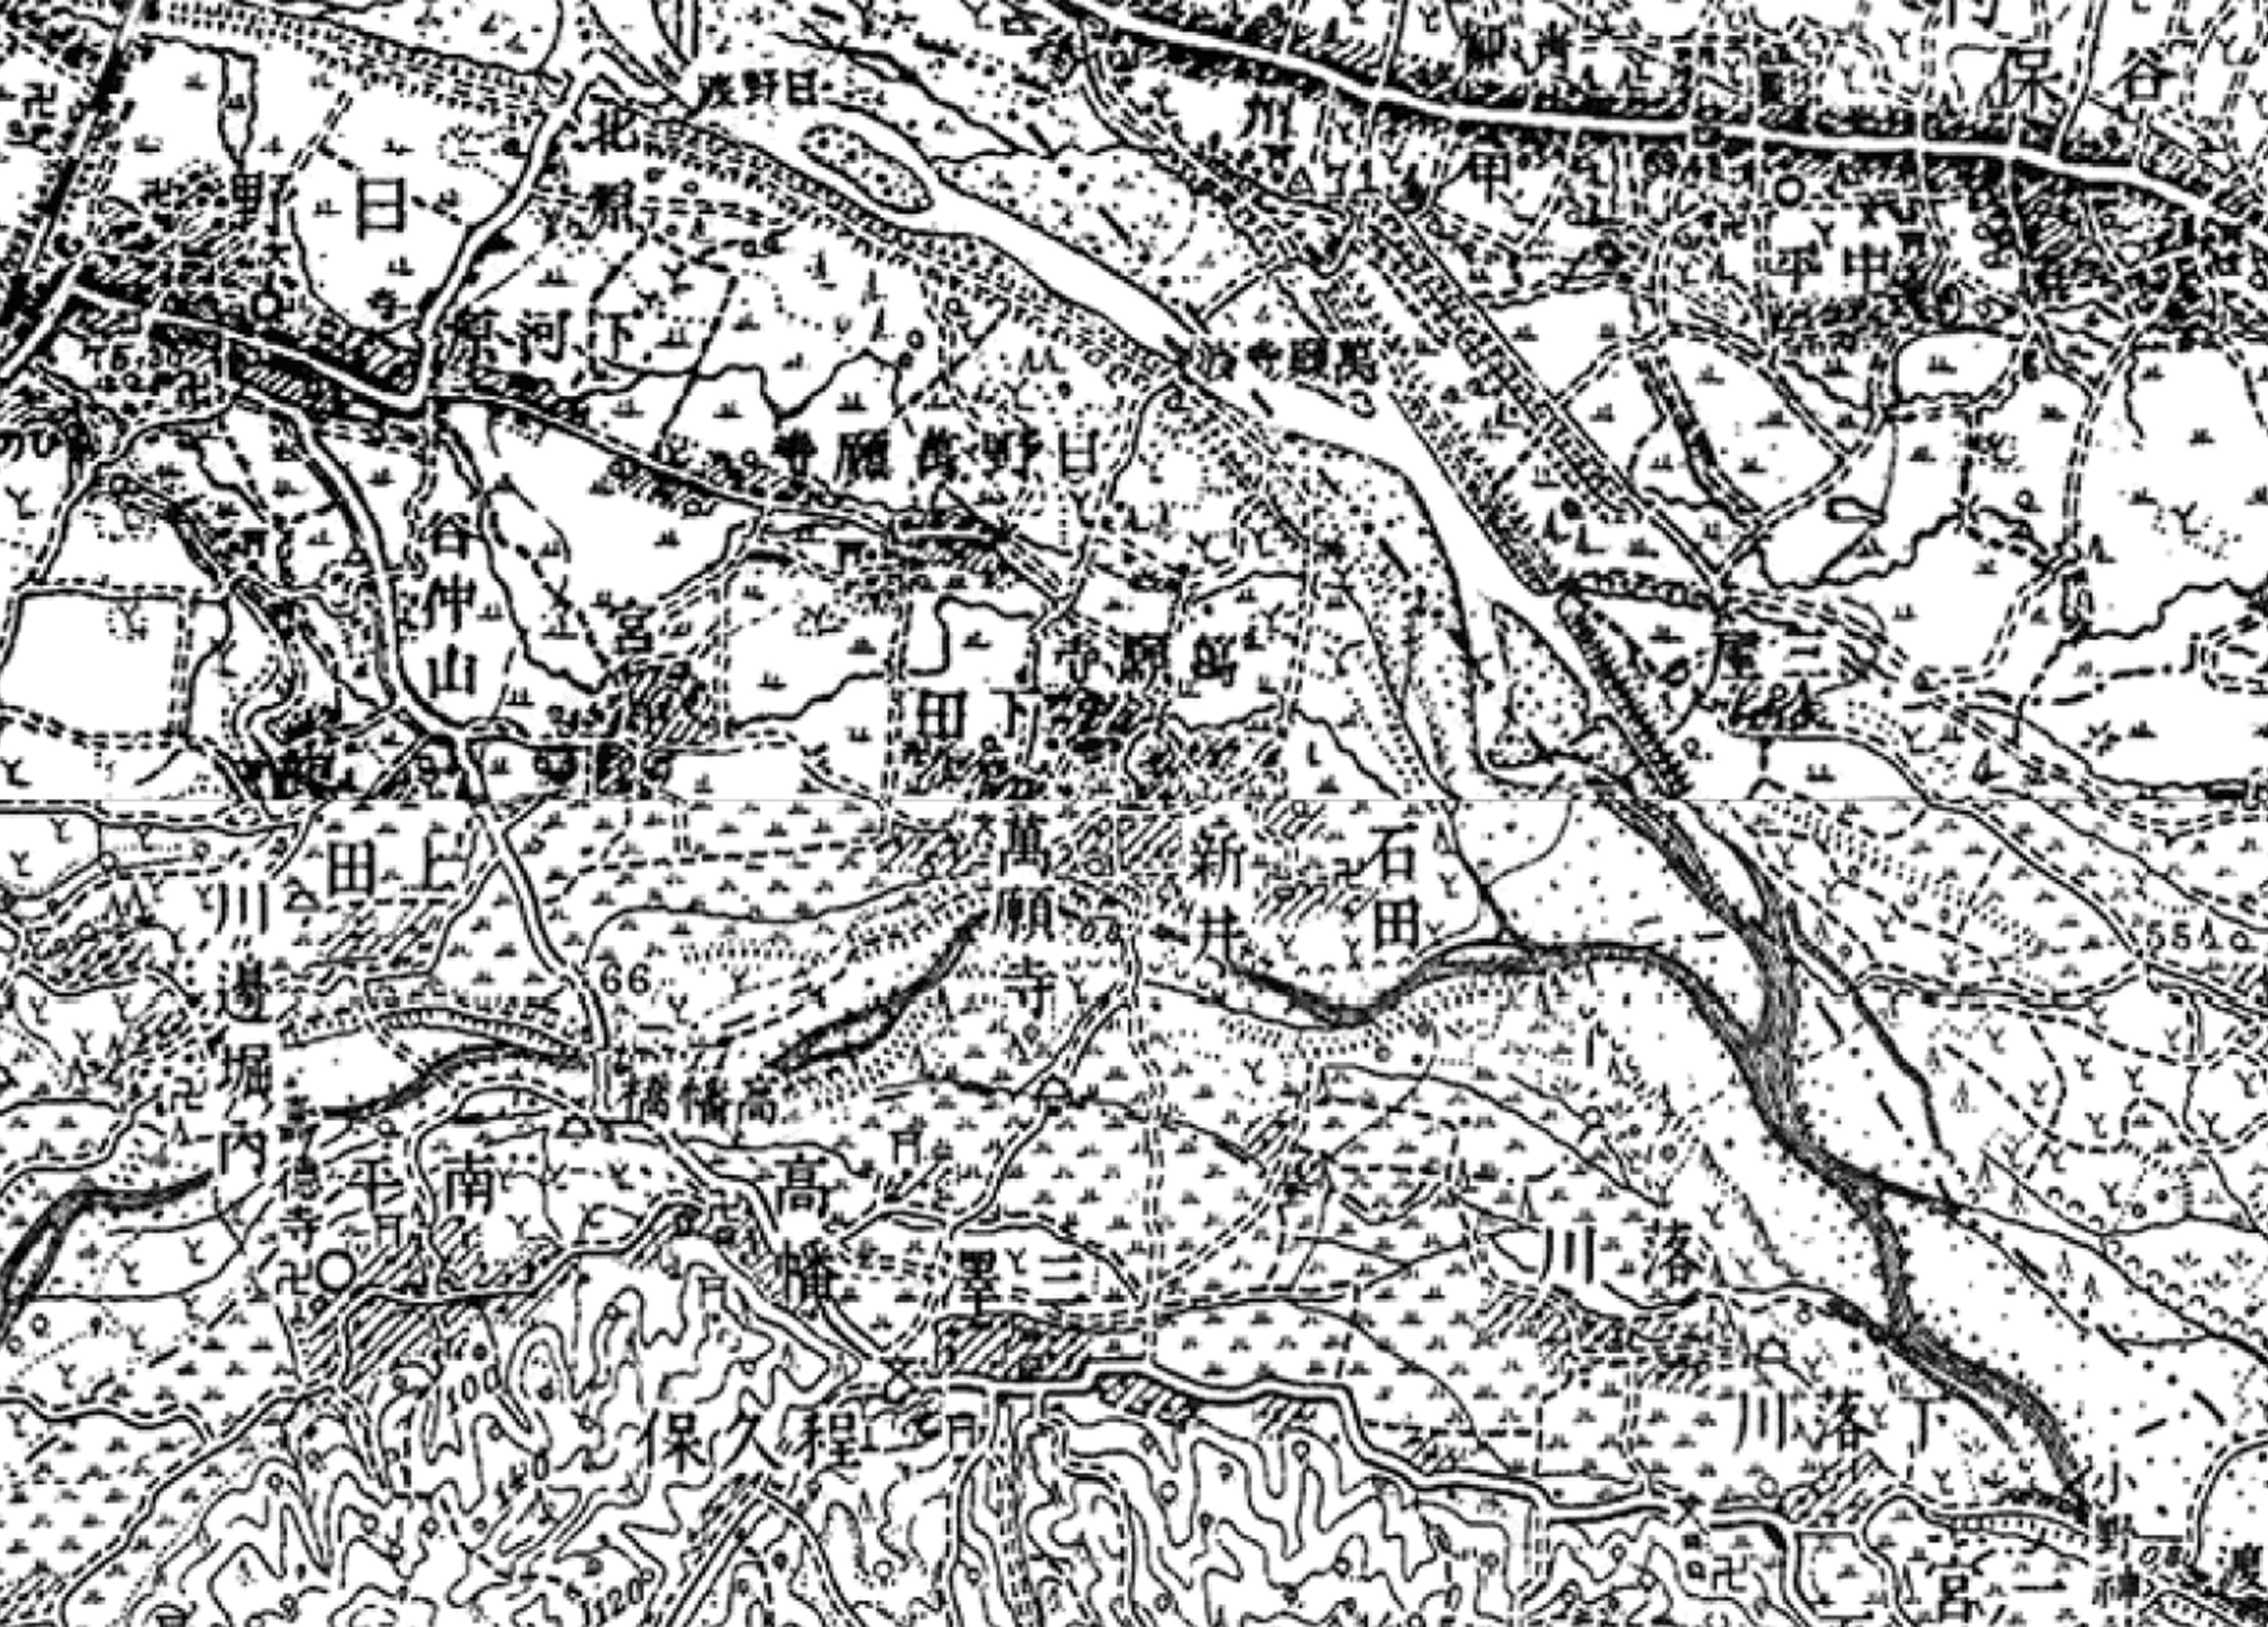 土方歳三生家　約100年前の地図